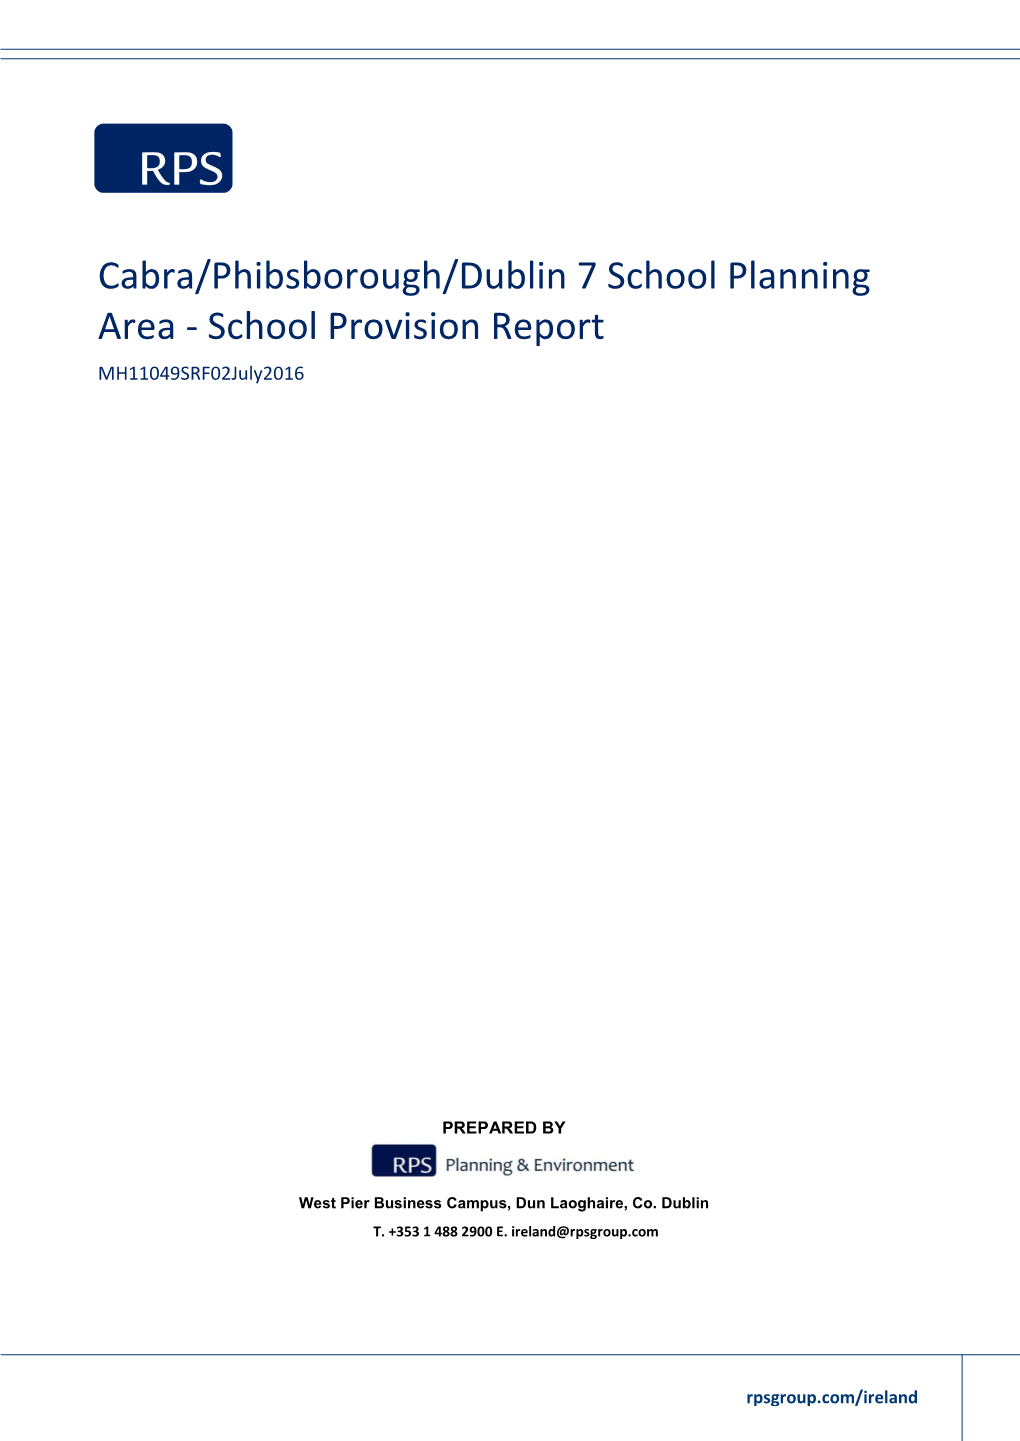 Report on Cabra/Phibsborough/Dublin 7 School Planning Area